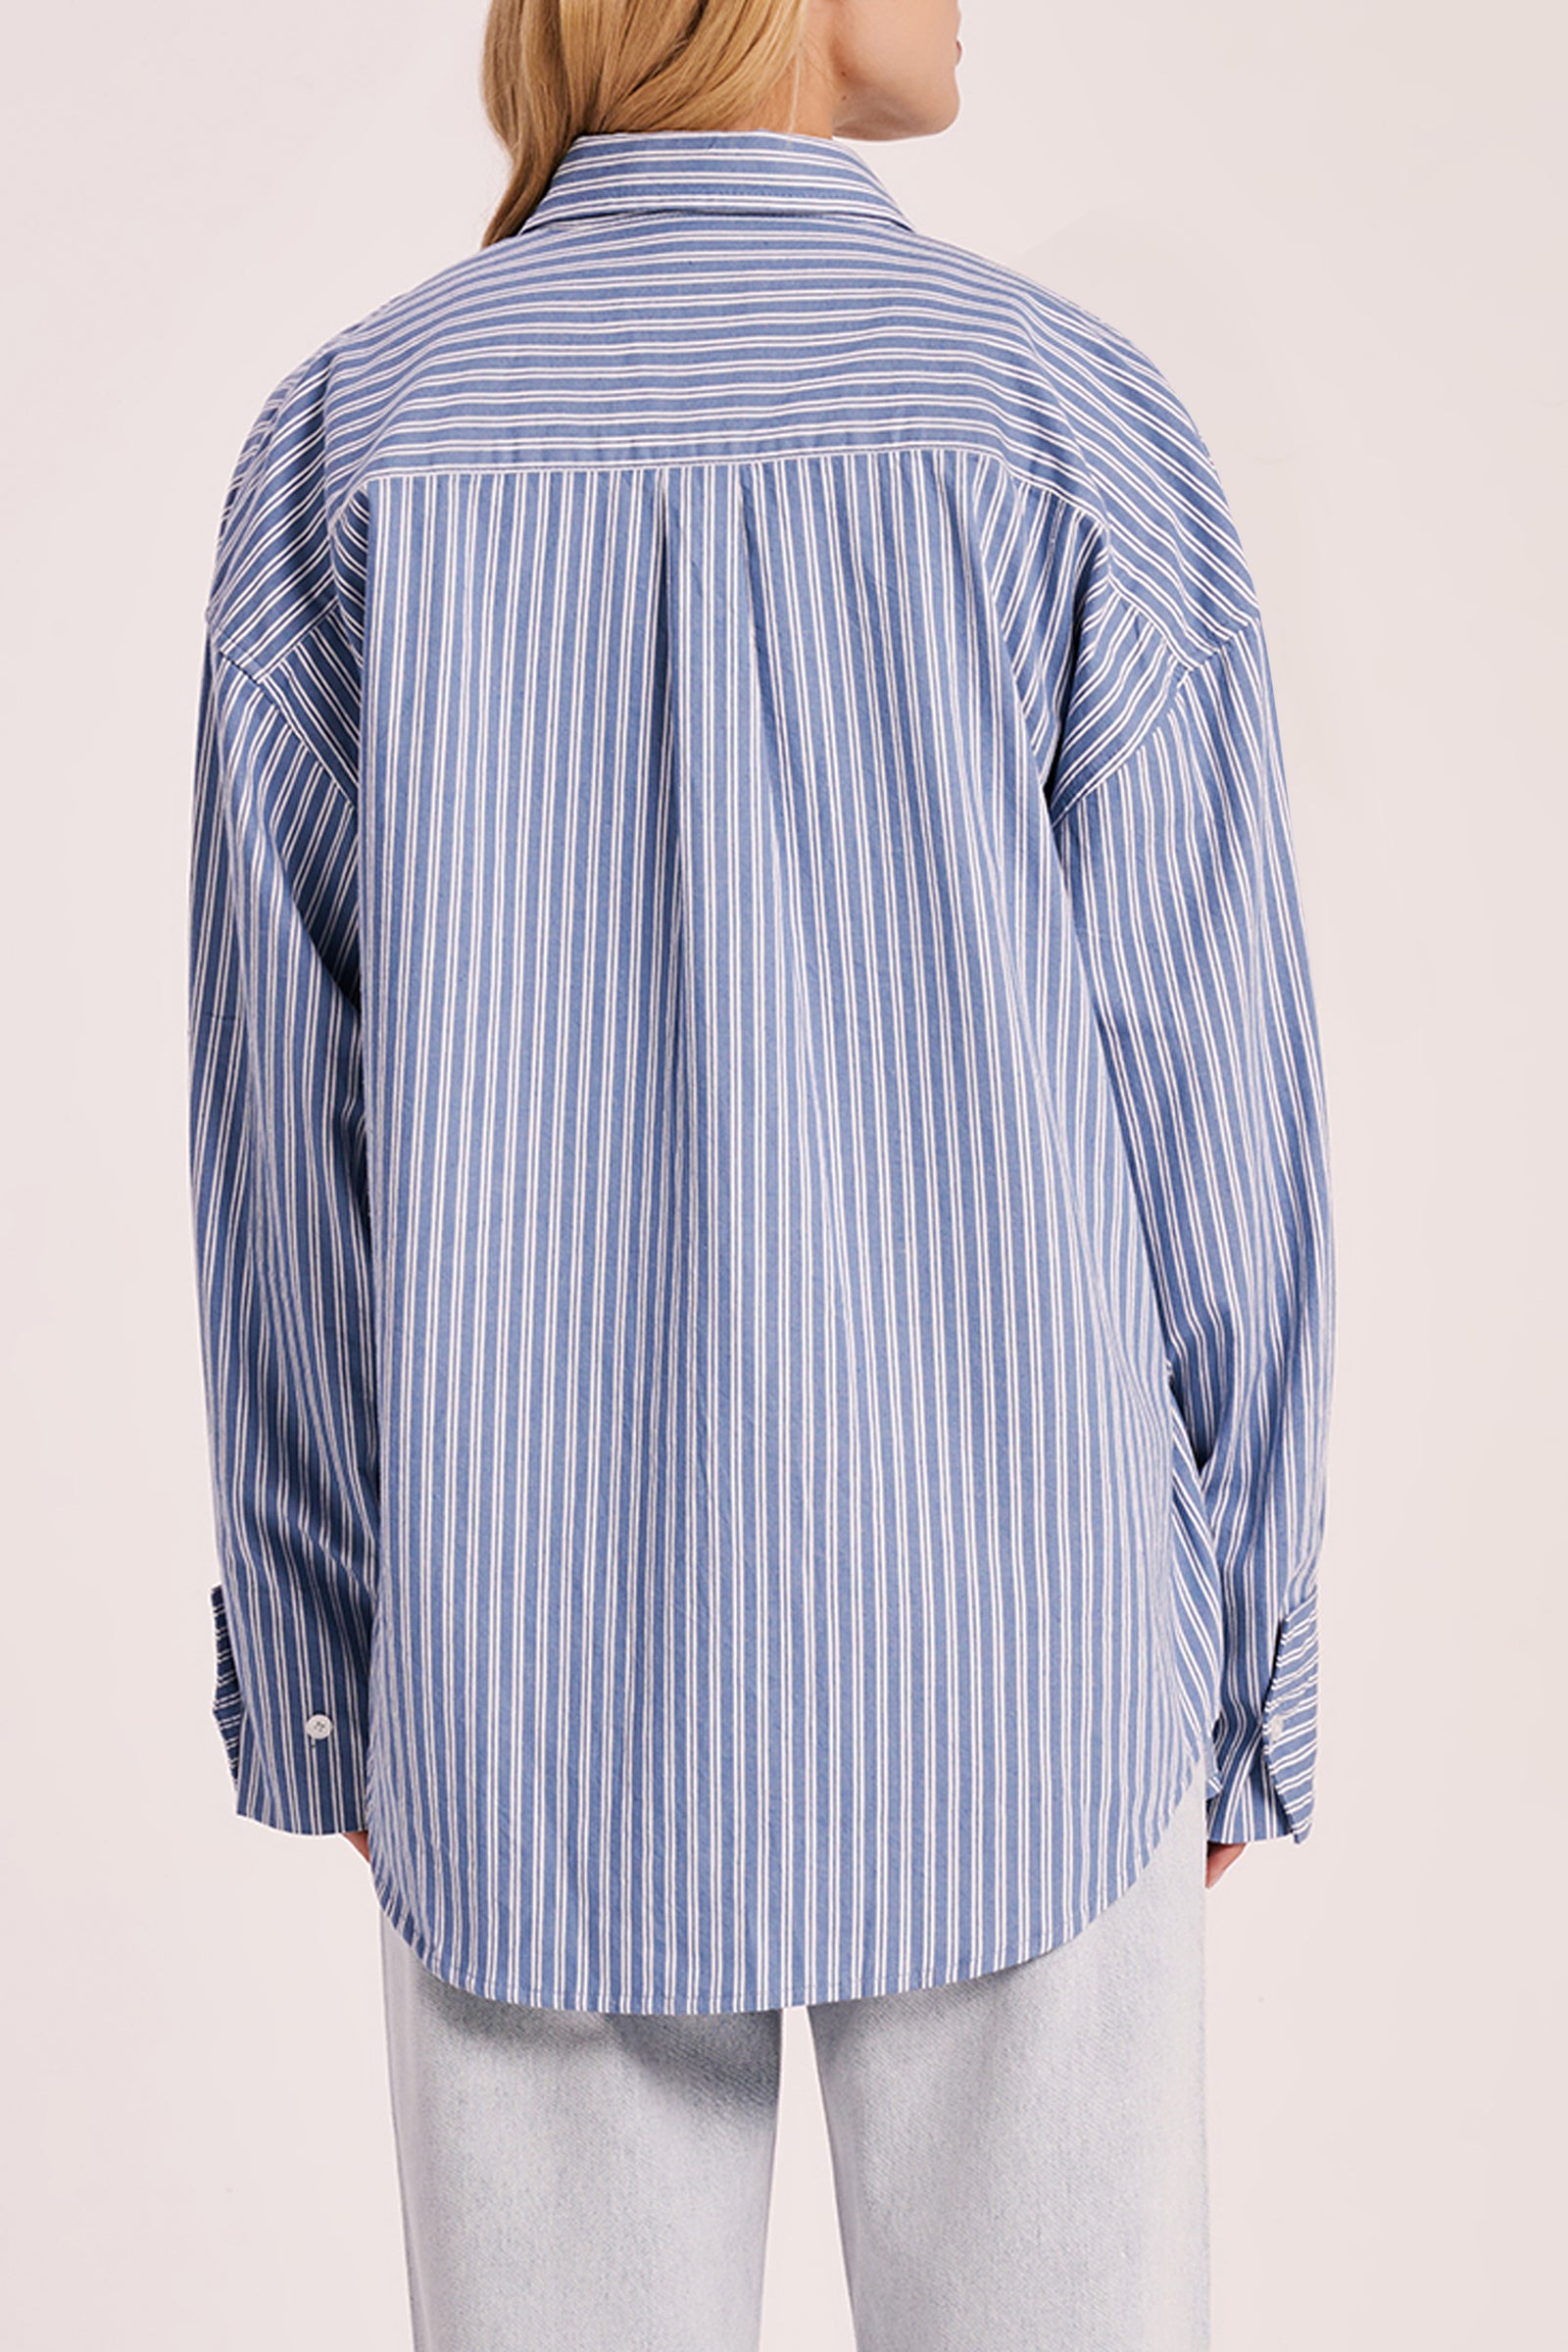 Emerson Shirt Blue Stripe 